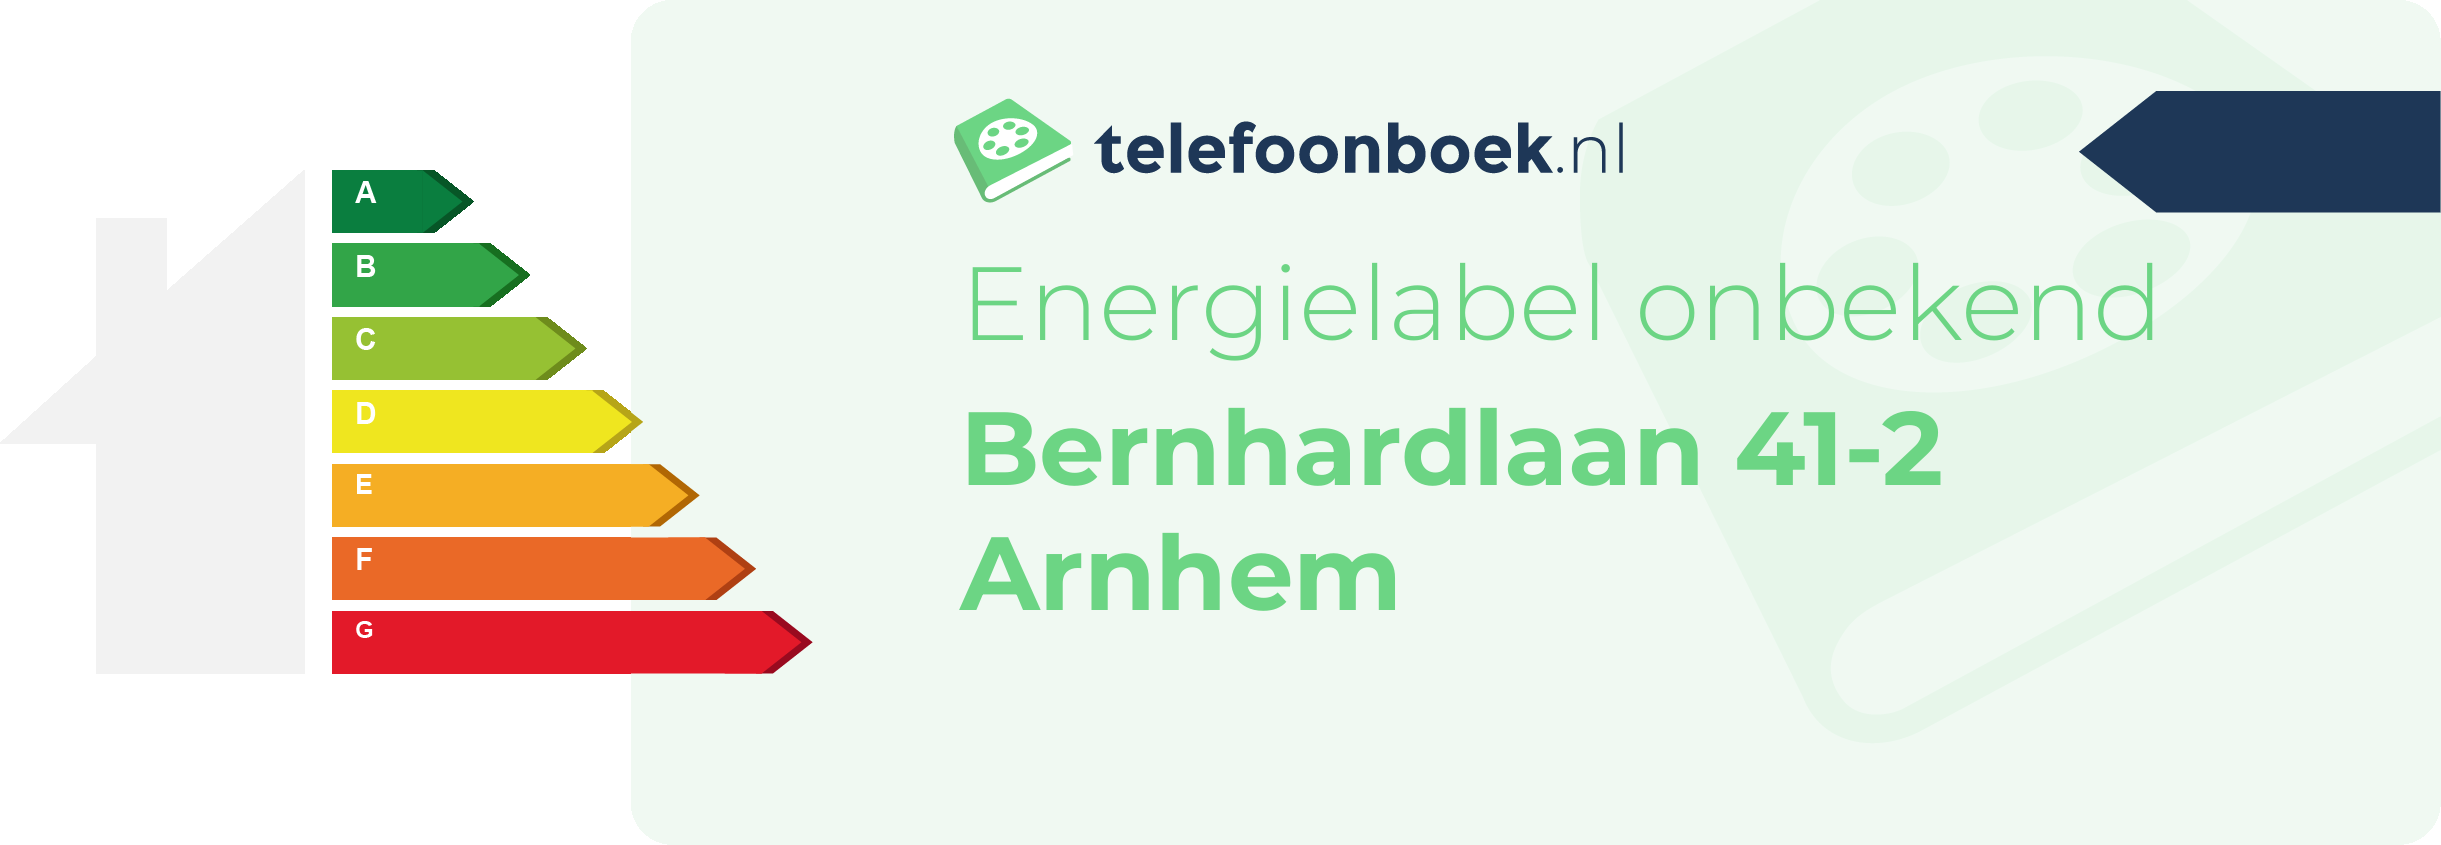 Energielabel Bernhardlaan 41-2 Arnhem